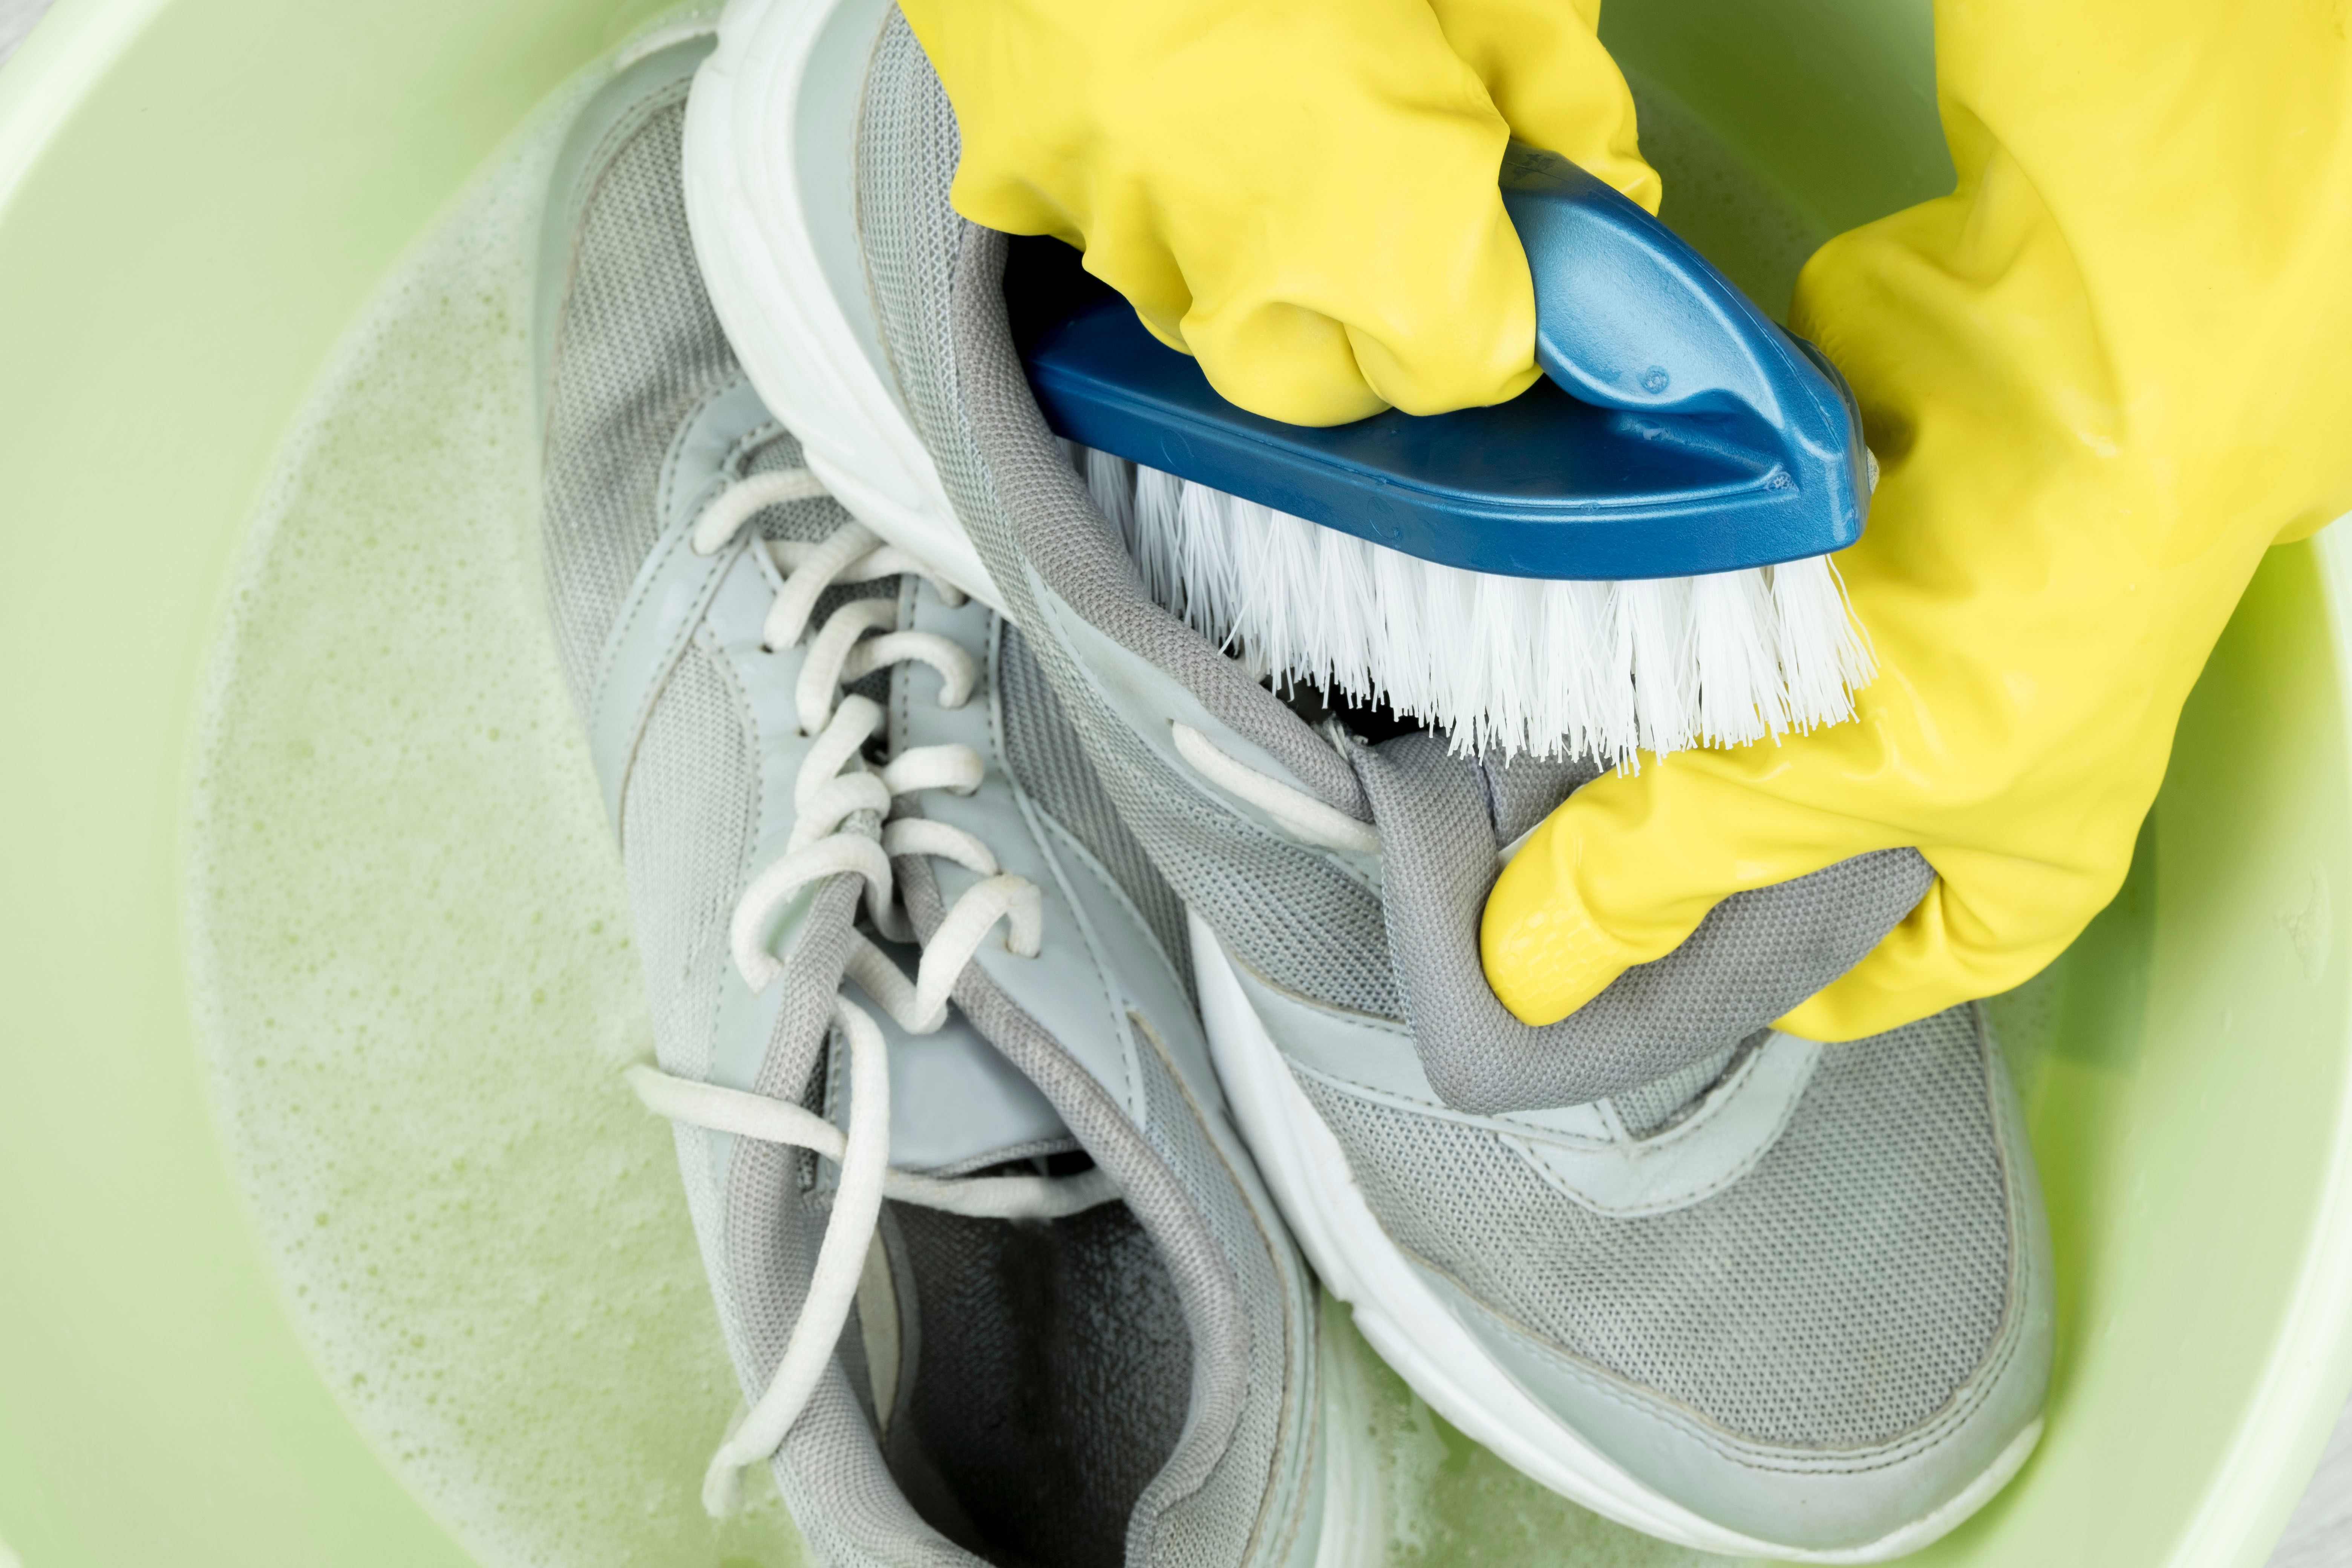 Person scrubbing shoes clean